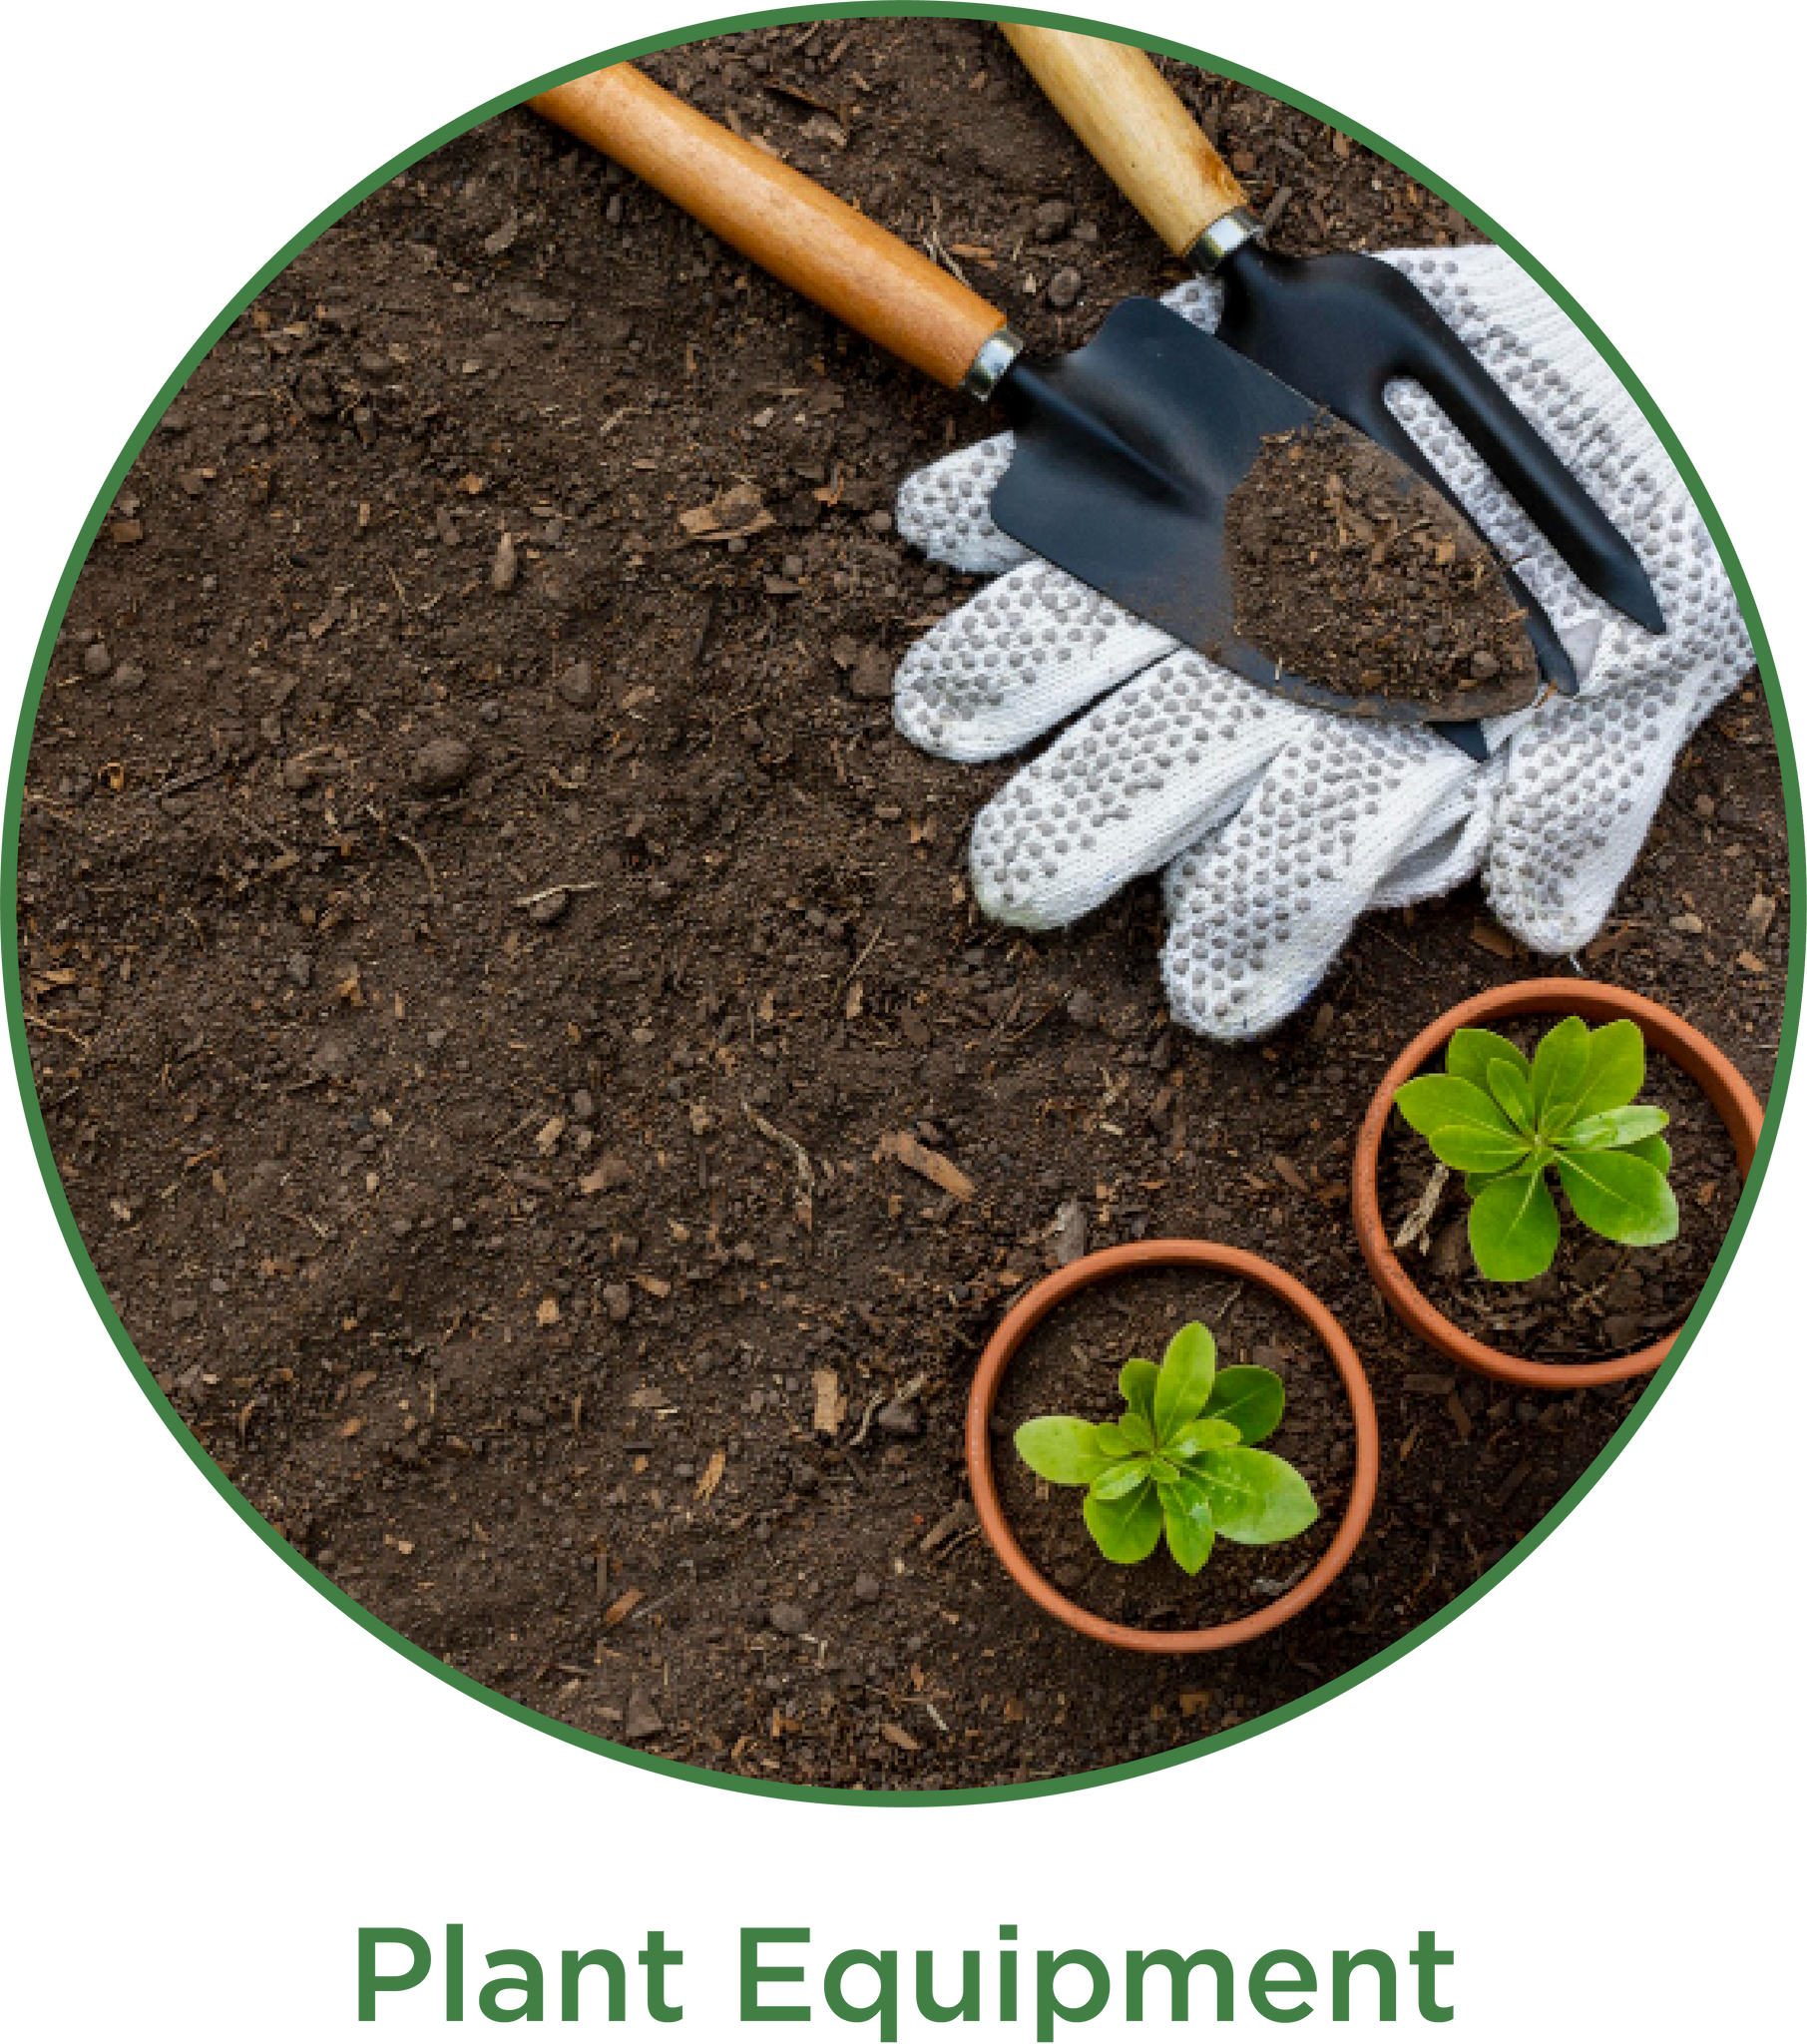 PLANT-MY-SEEDS | Buy Online Fresh Organic, Heirloom, Garden Equipment - Plant Care & Grow Guide